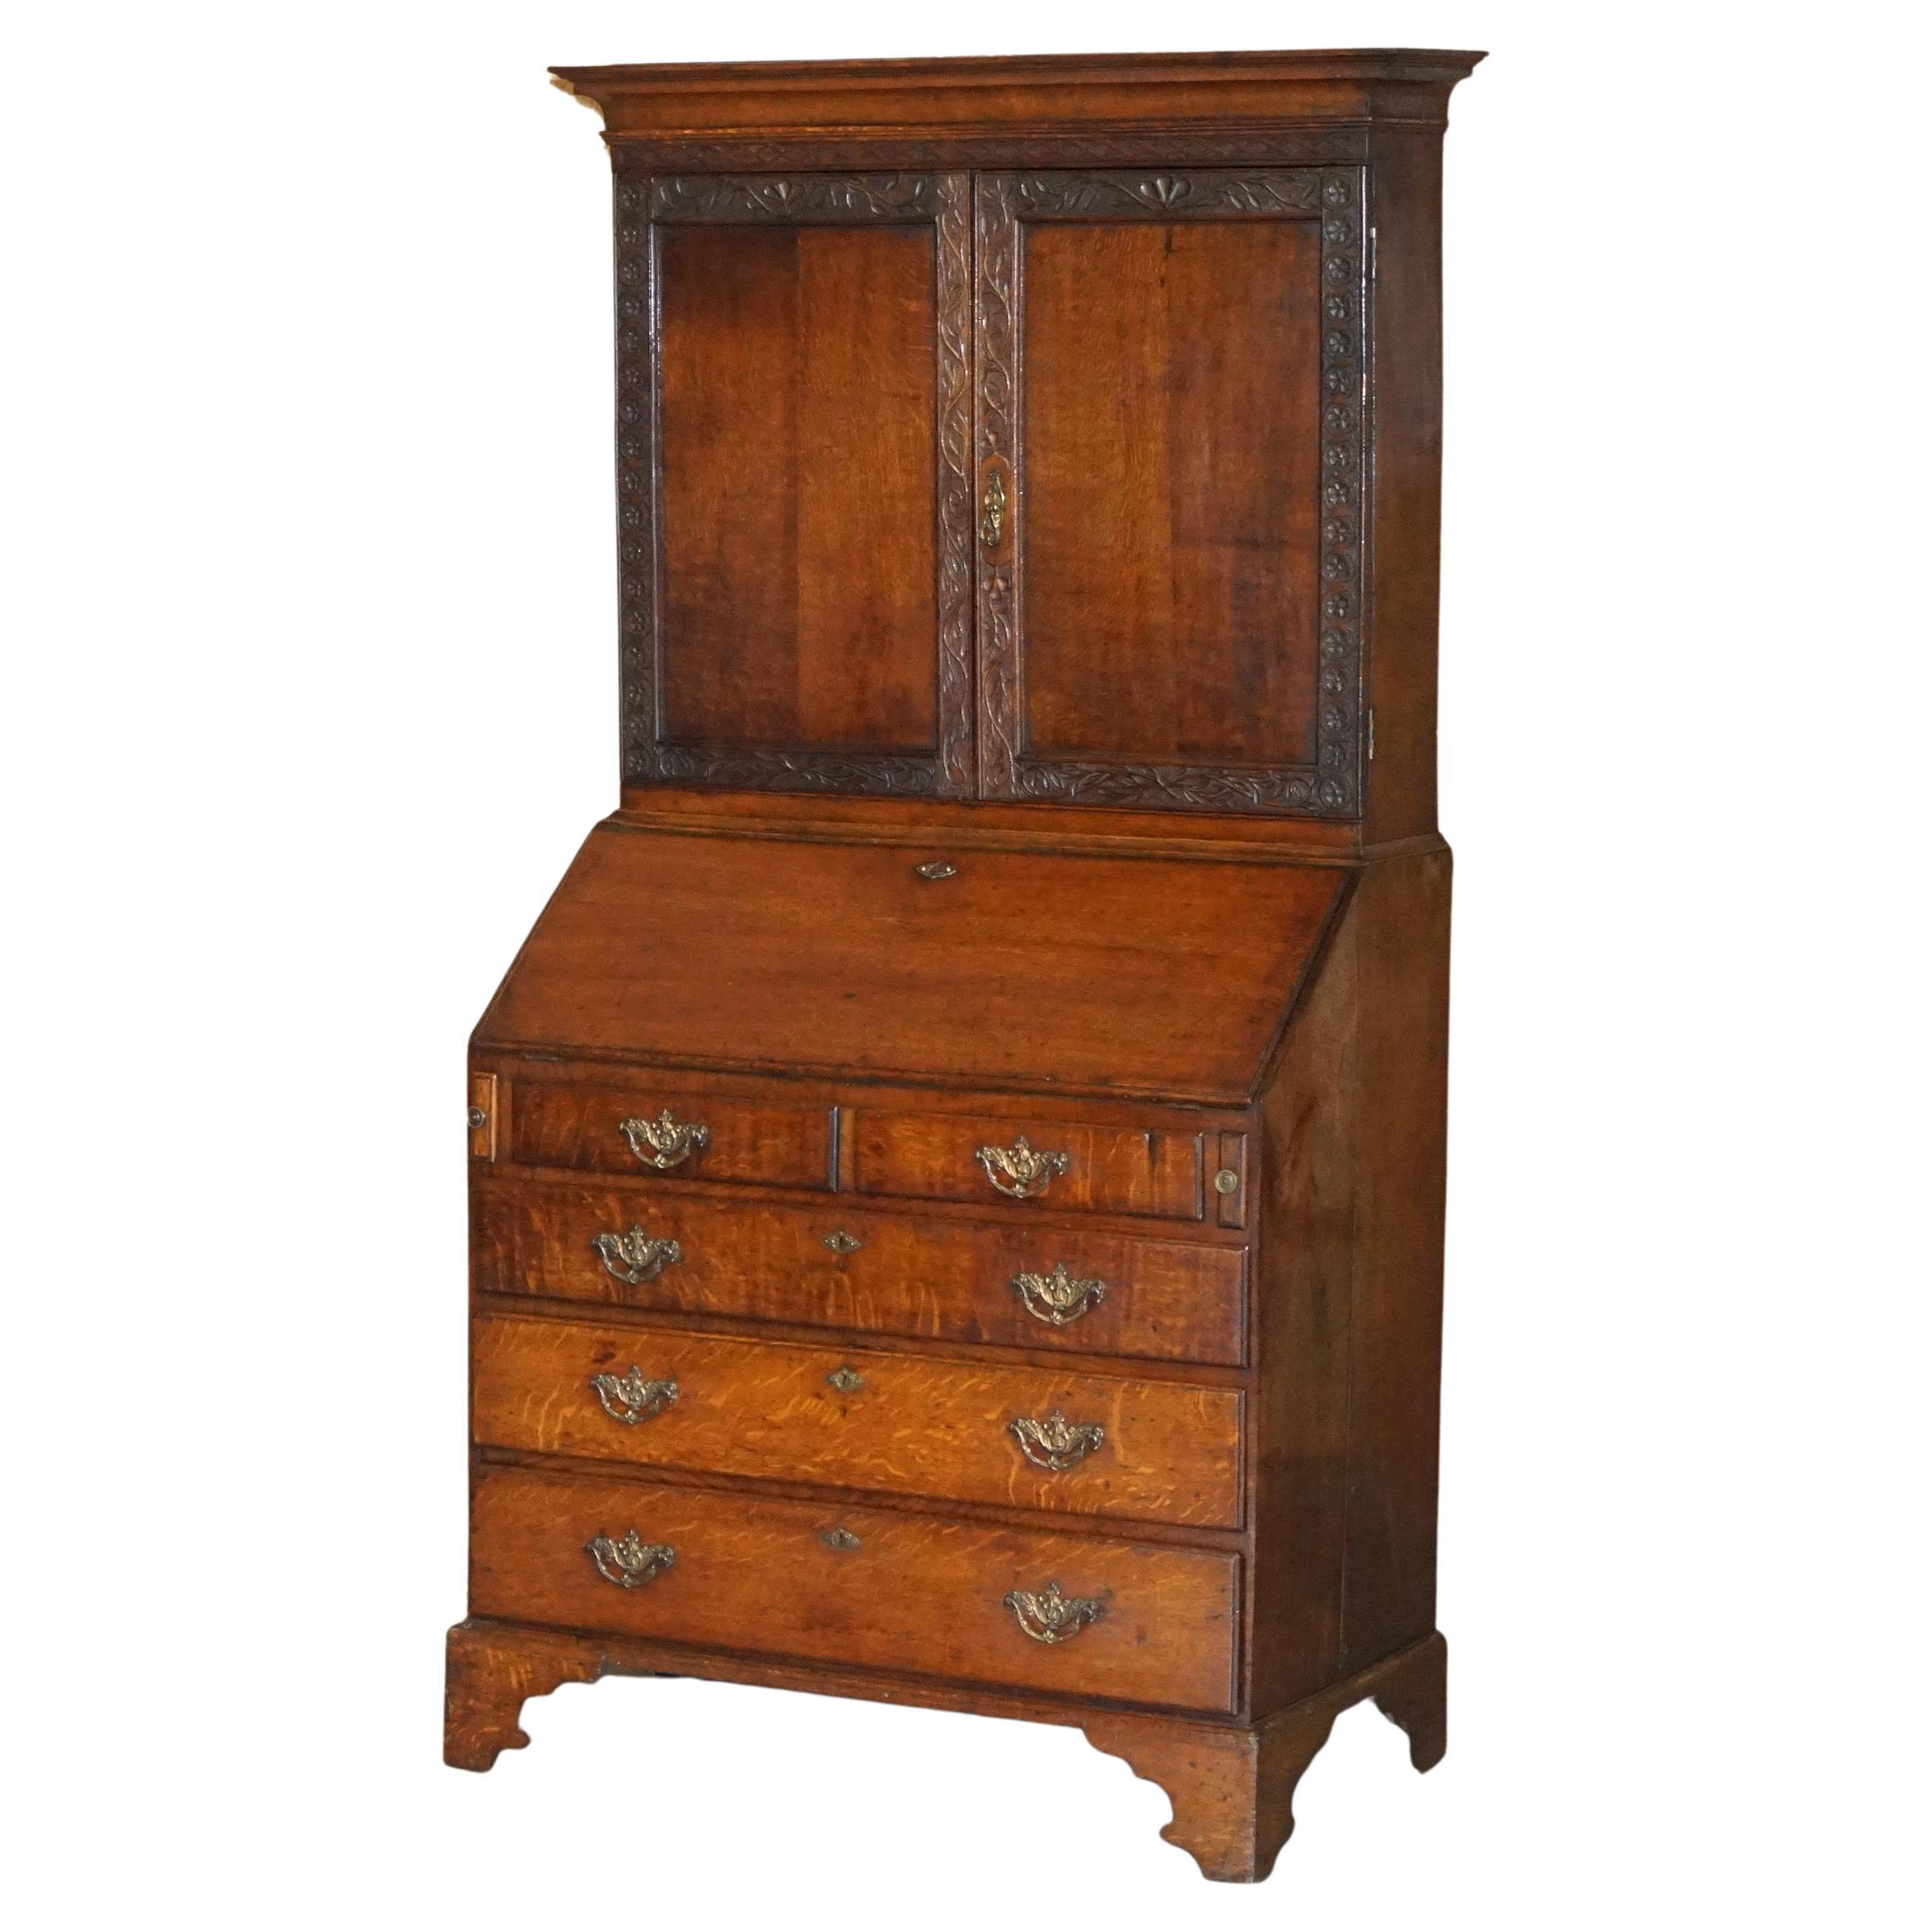 George III circa 1760 English Oak Thomas Chippendale Carved Bureau Bookcase For Sale